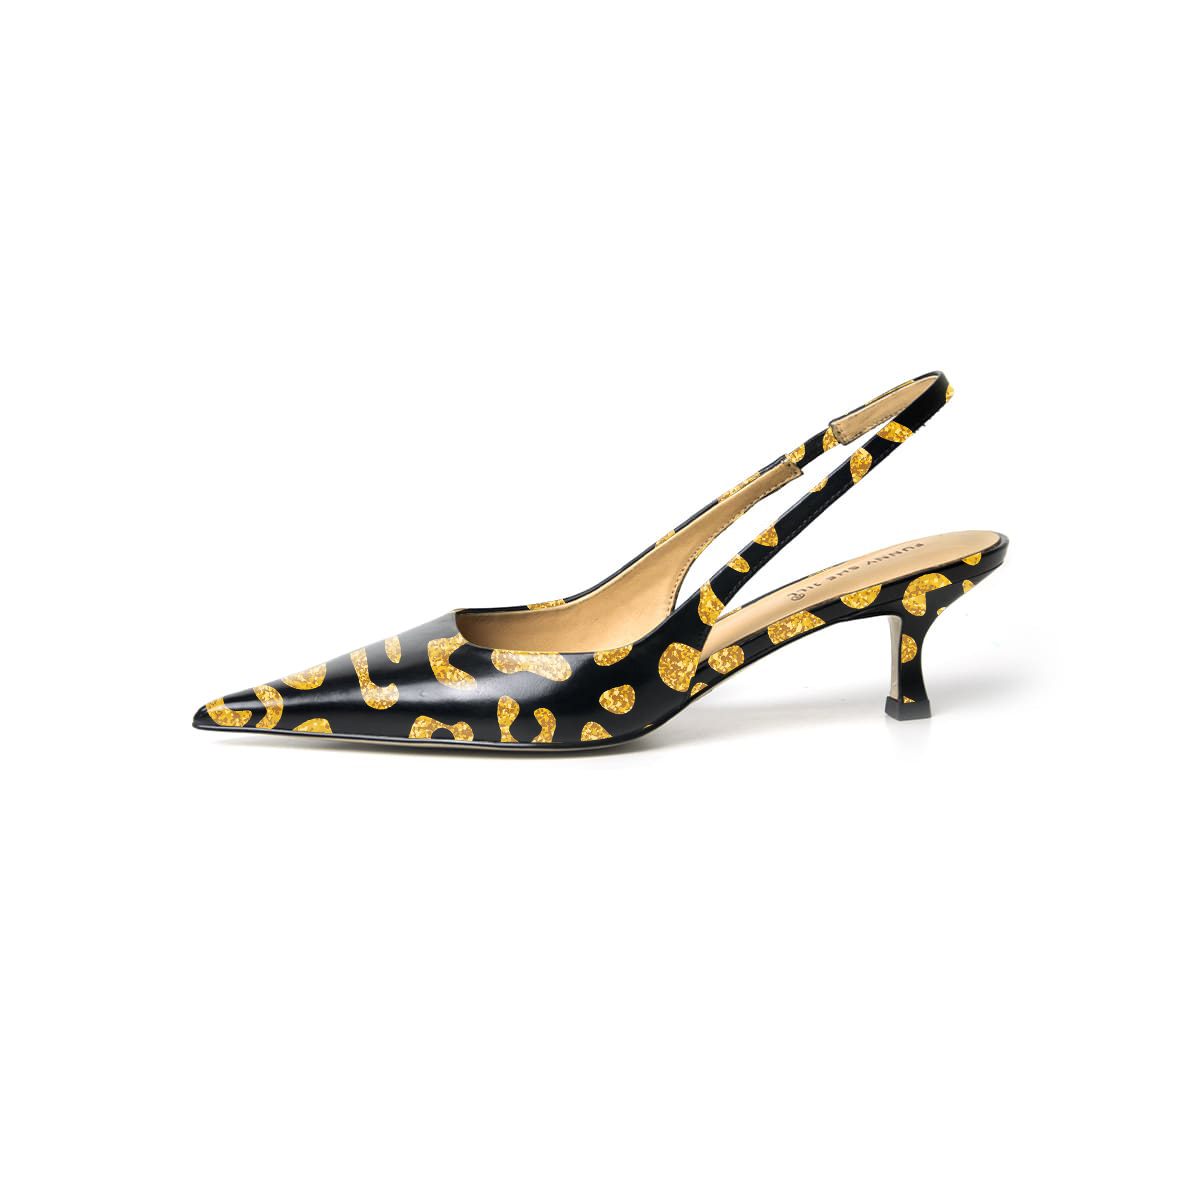 Almond Leopard Print Patent Leather Pointed Toe Elegant Kitten